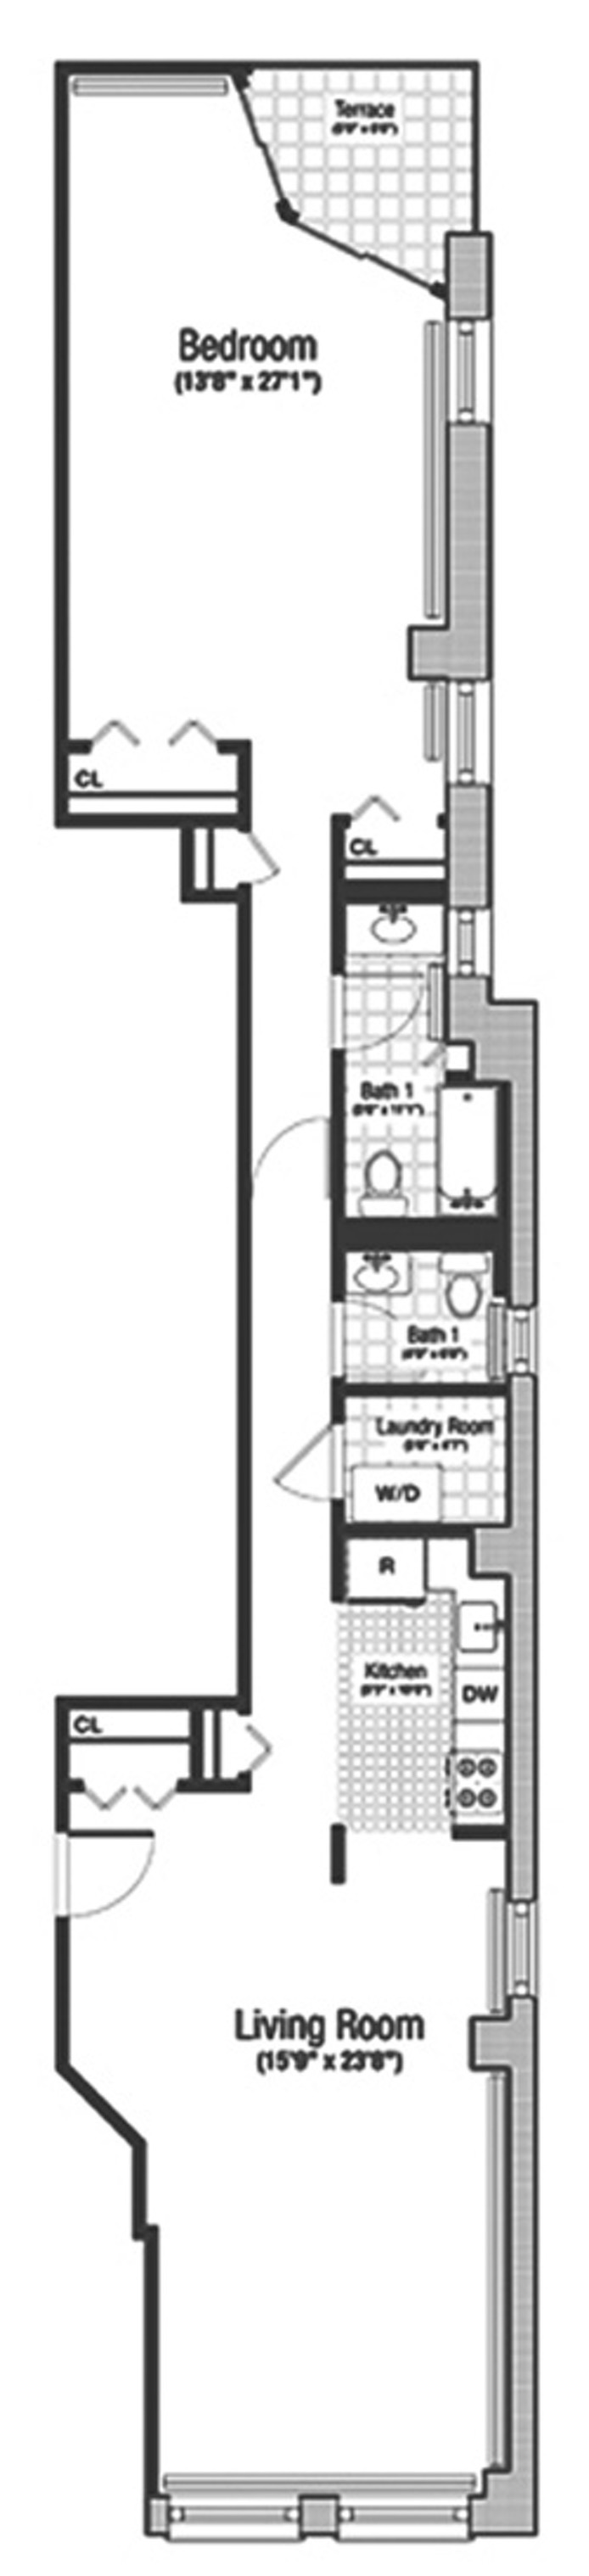 Floorplan for 36 Laight Street, 6A